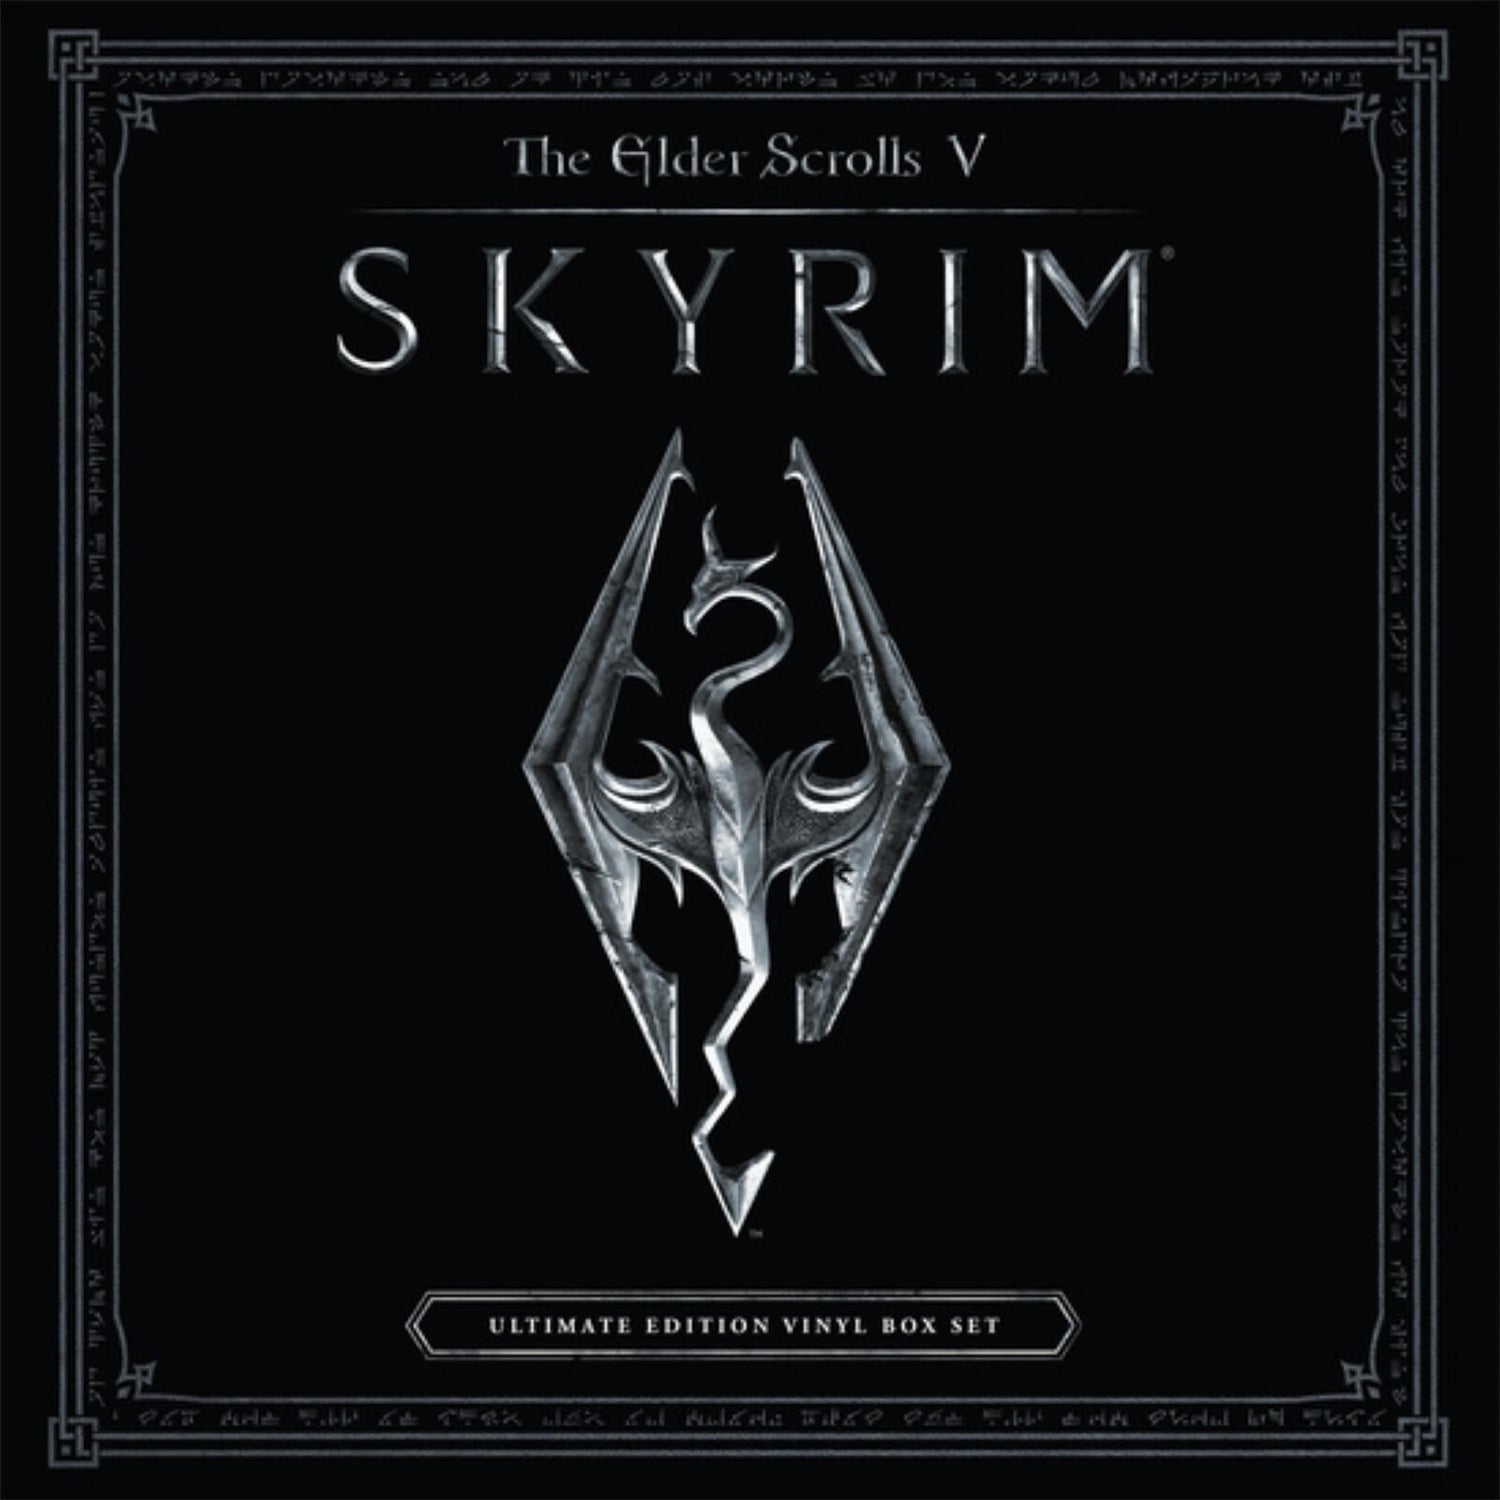 The Elder Scrolls V: Skyrim (Ultimate Edition) Vinyl Box Set Box Set